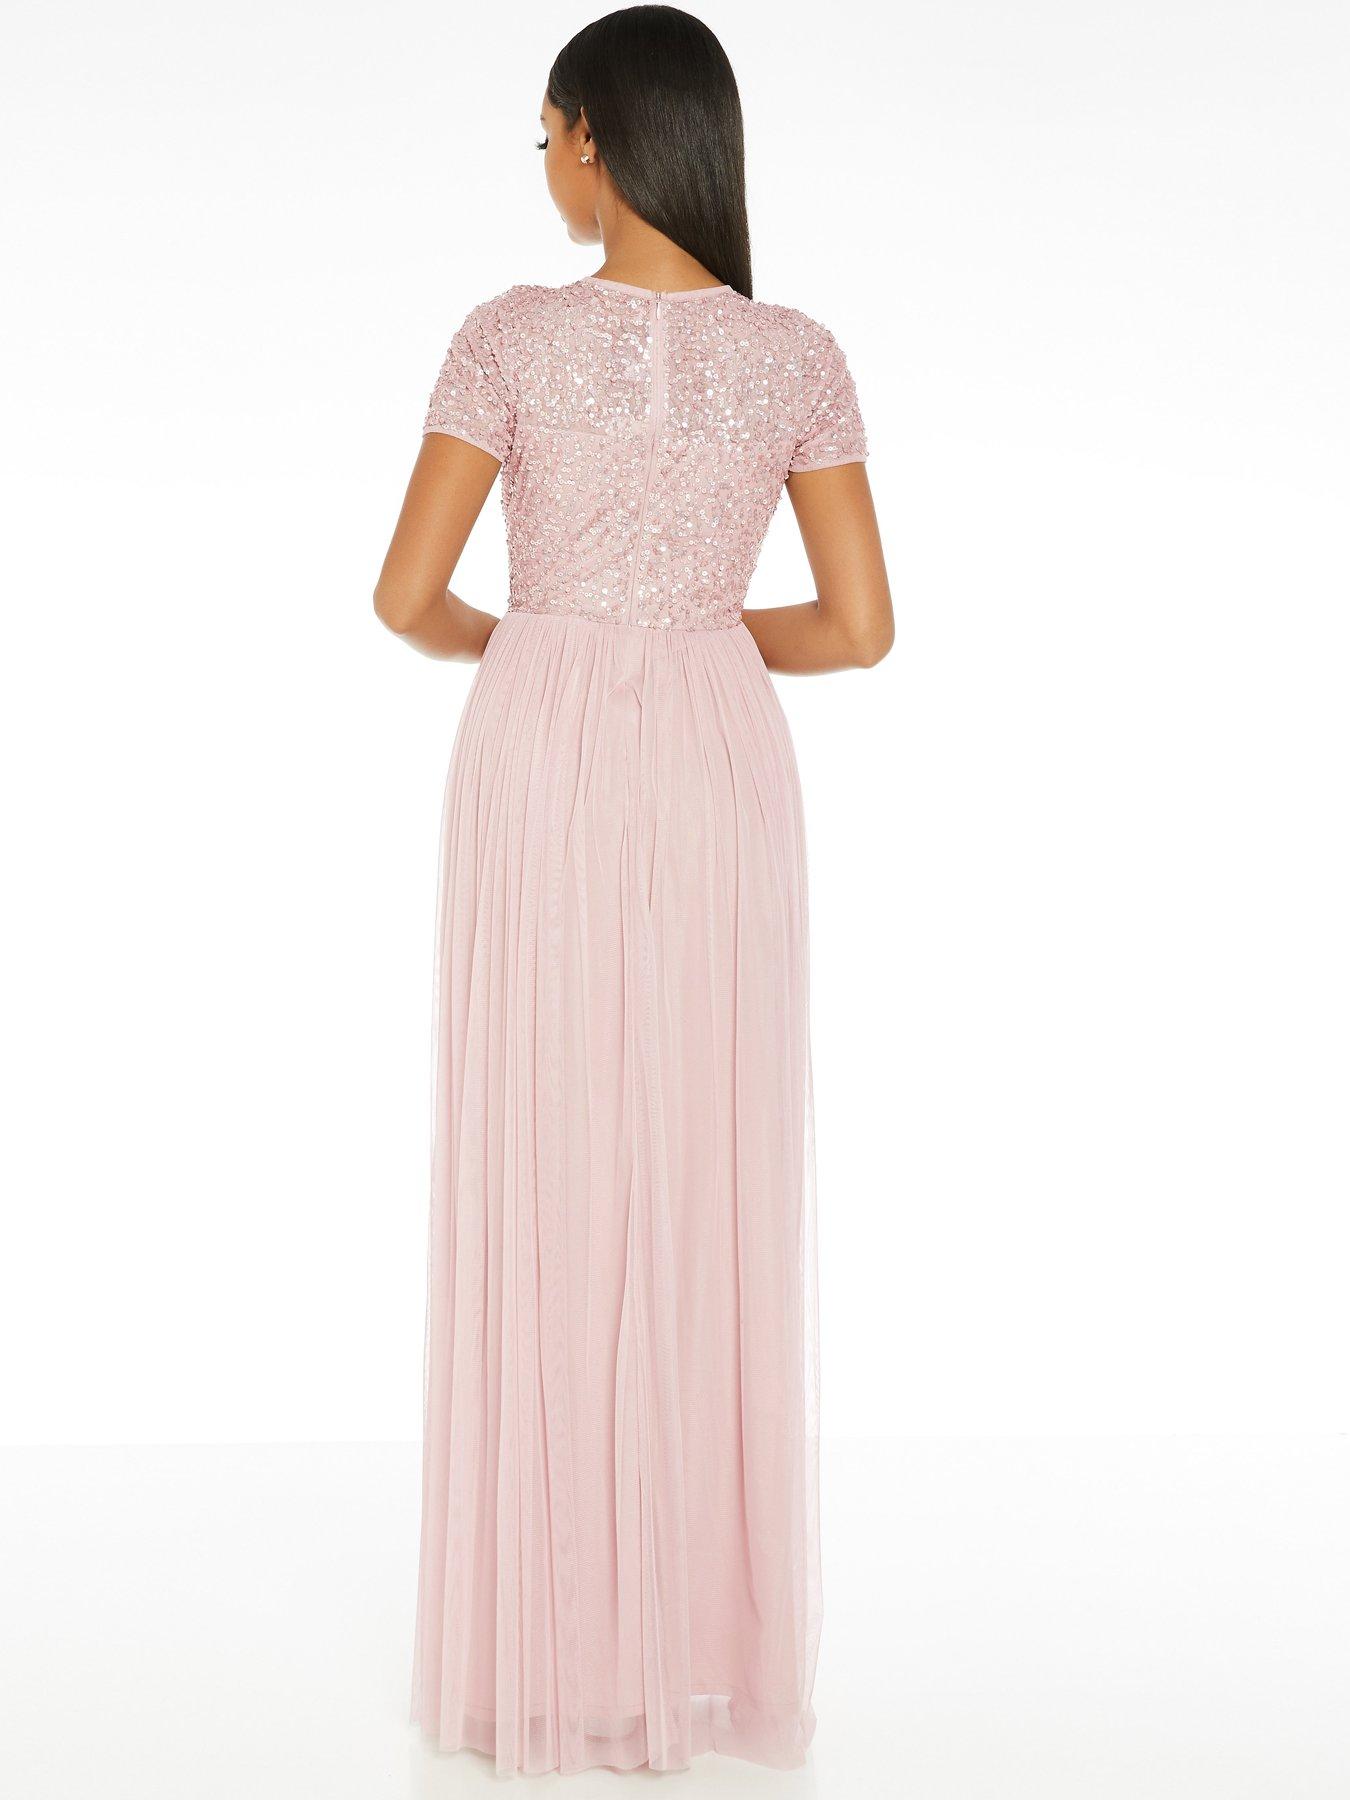 quiz dusky pink bridesmaid dress